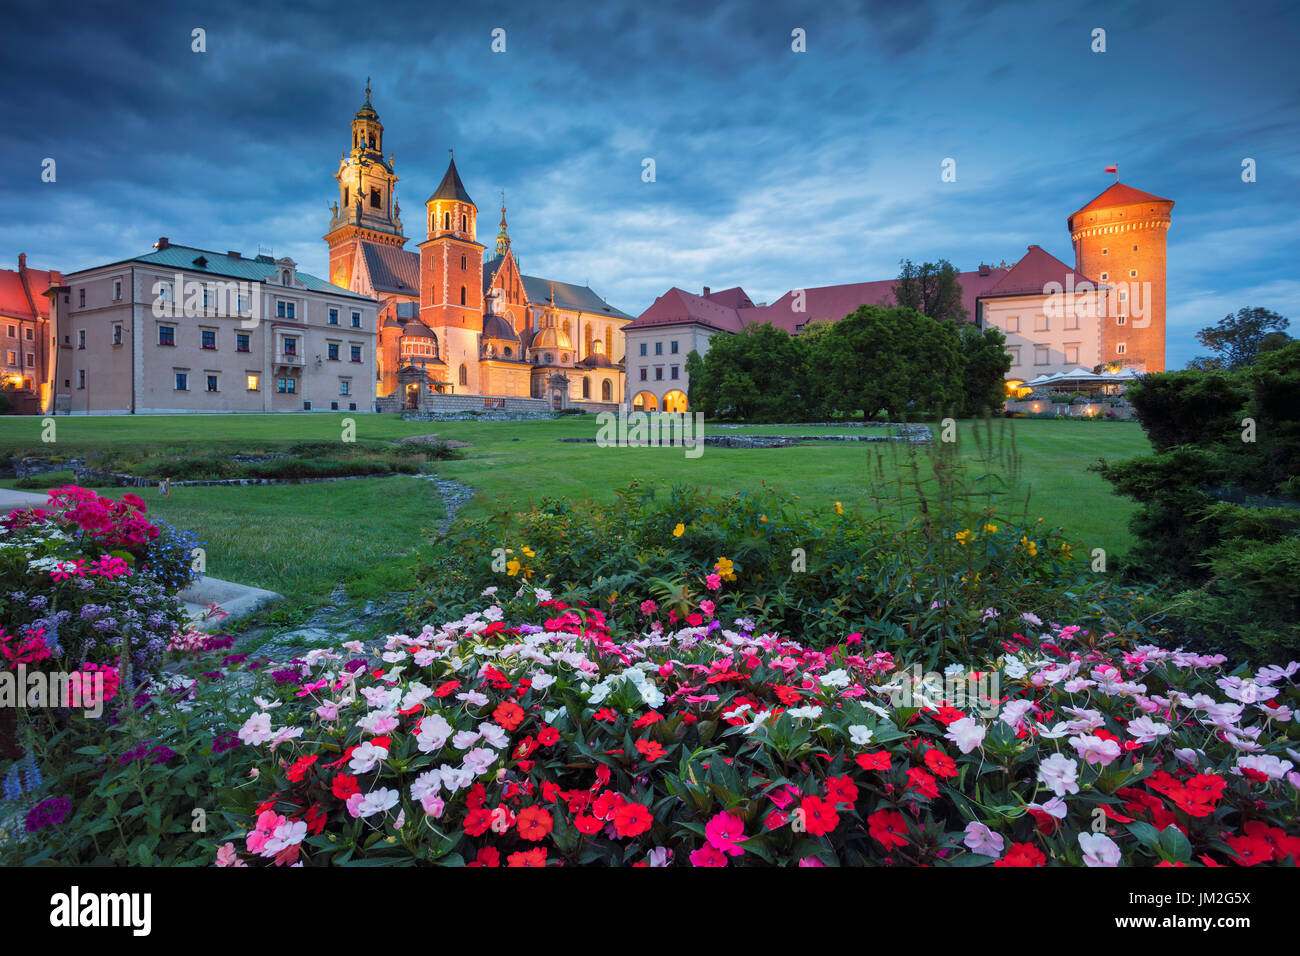 Wawel Castle, Krakow. Image of Wawel Castle in Krakow, Poland during twilight blue hour. Stock Photo